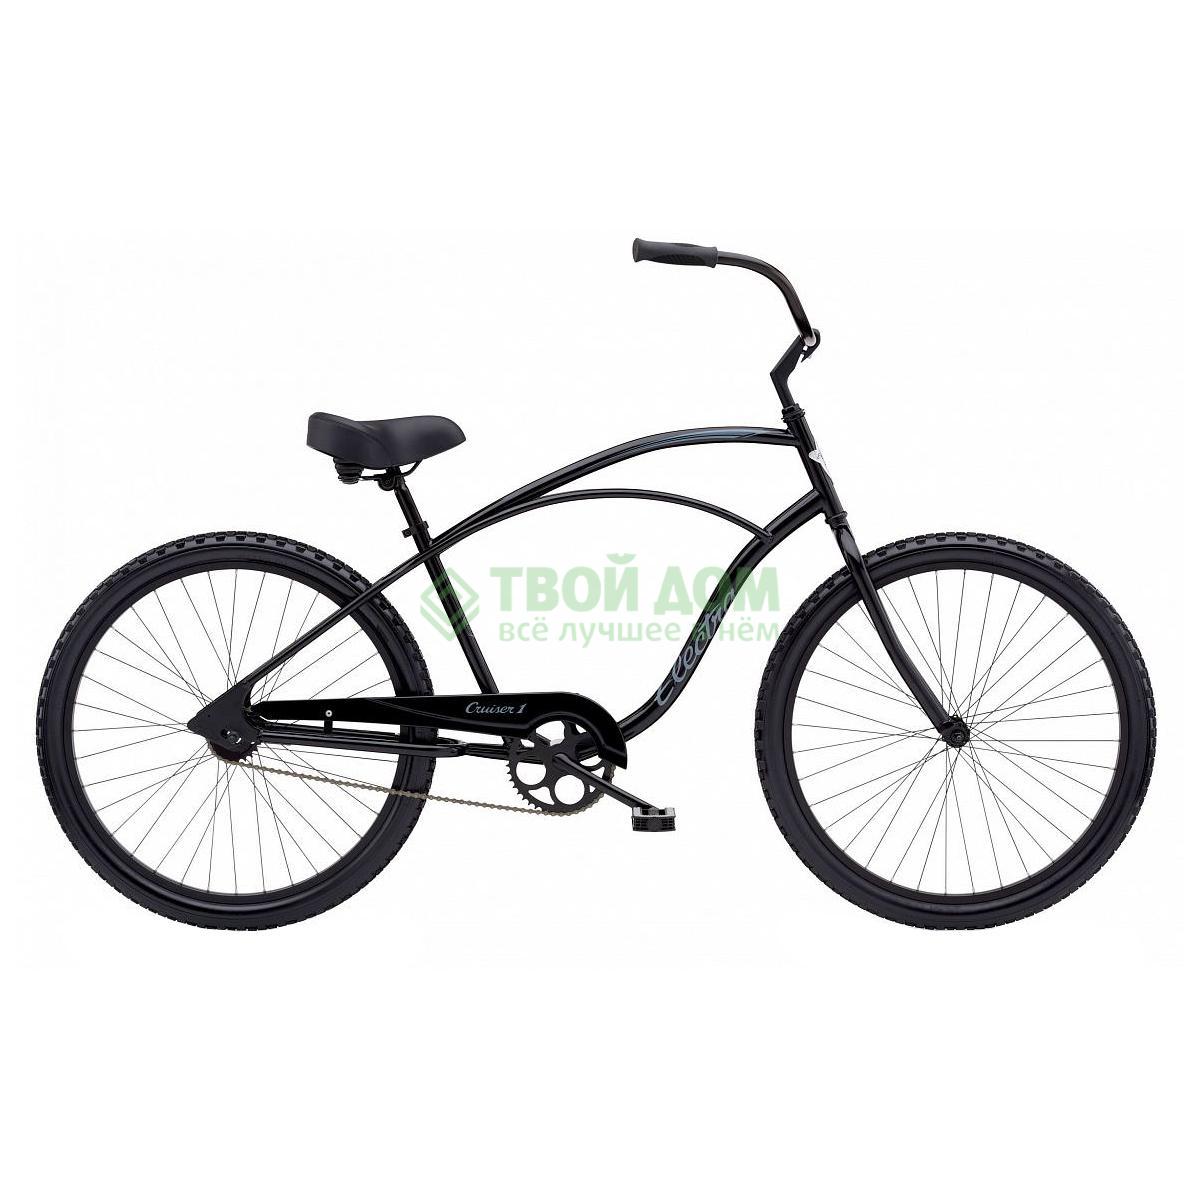 фото Велосипед electra bicycle cruiser 1 26 black (512999)